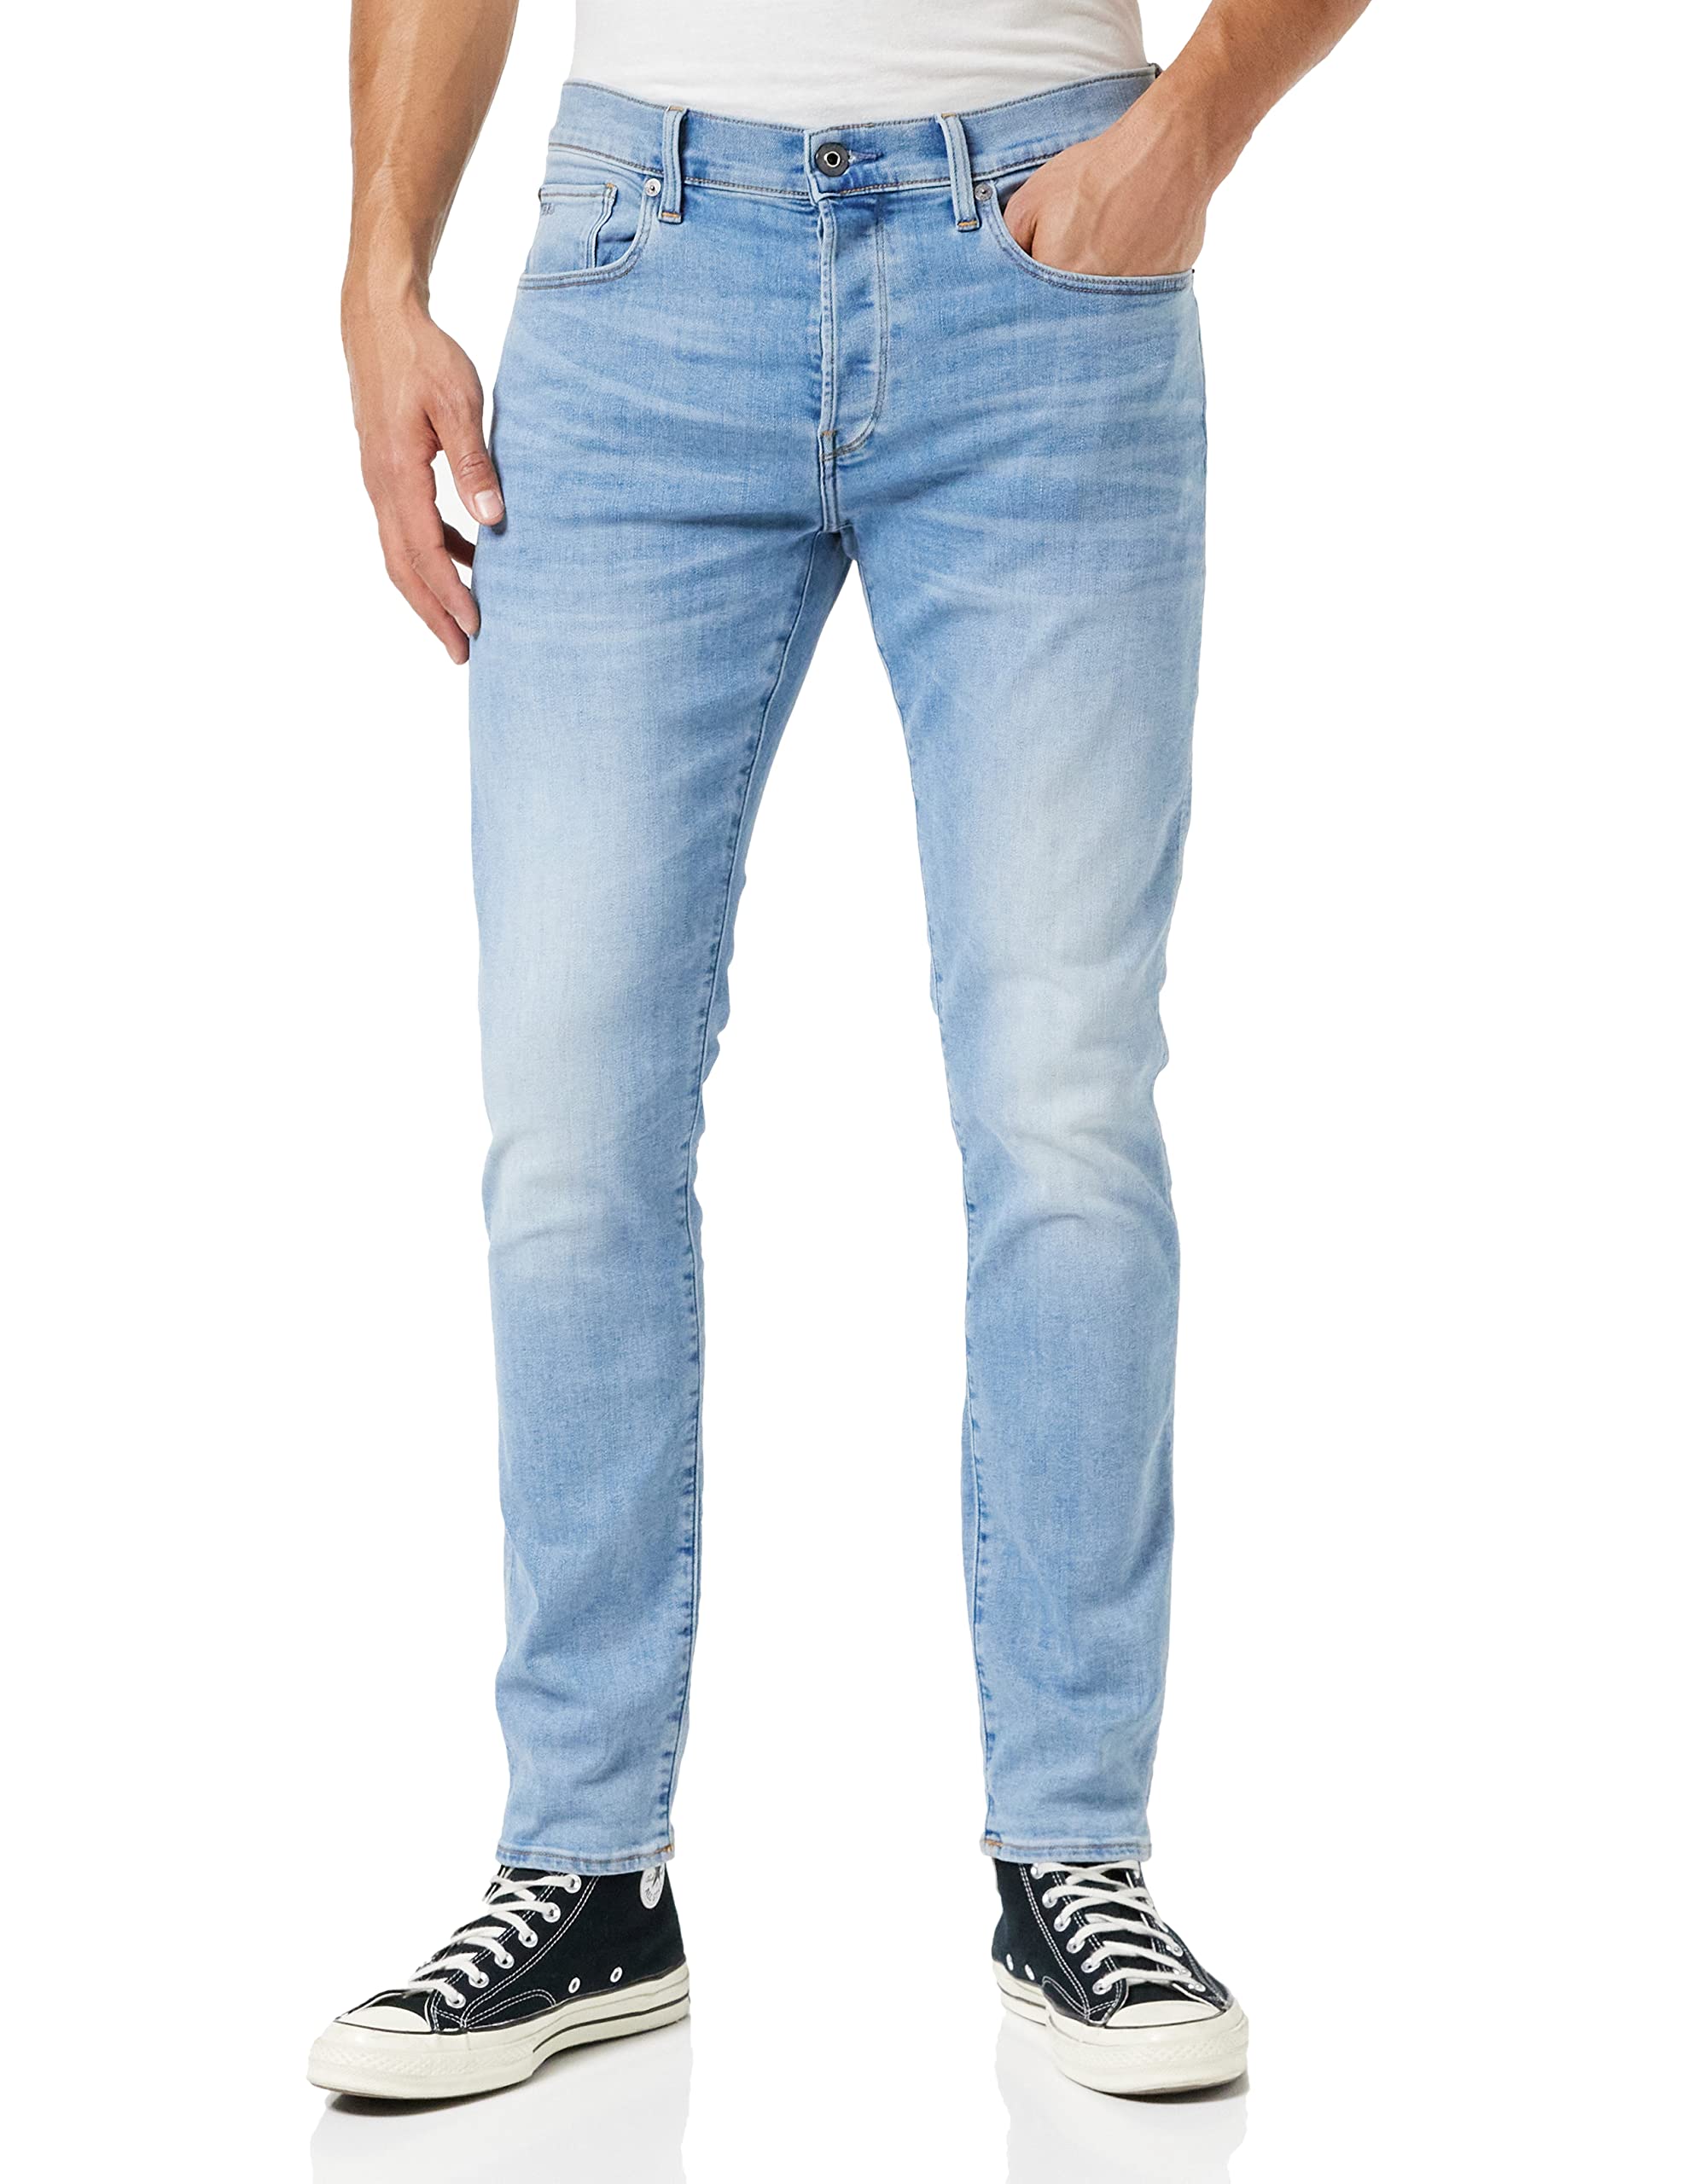 G-STAR RAW Herren 3301 Slim Jeans, Blau (lt indigo aged 51001-8968-8436), 28W / 32L